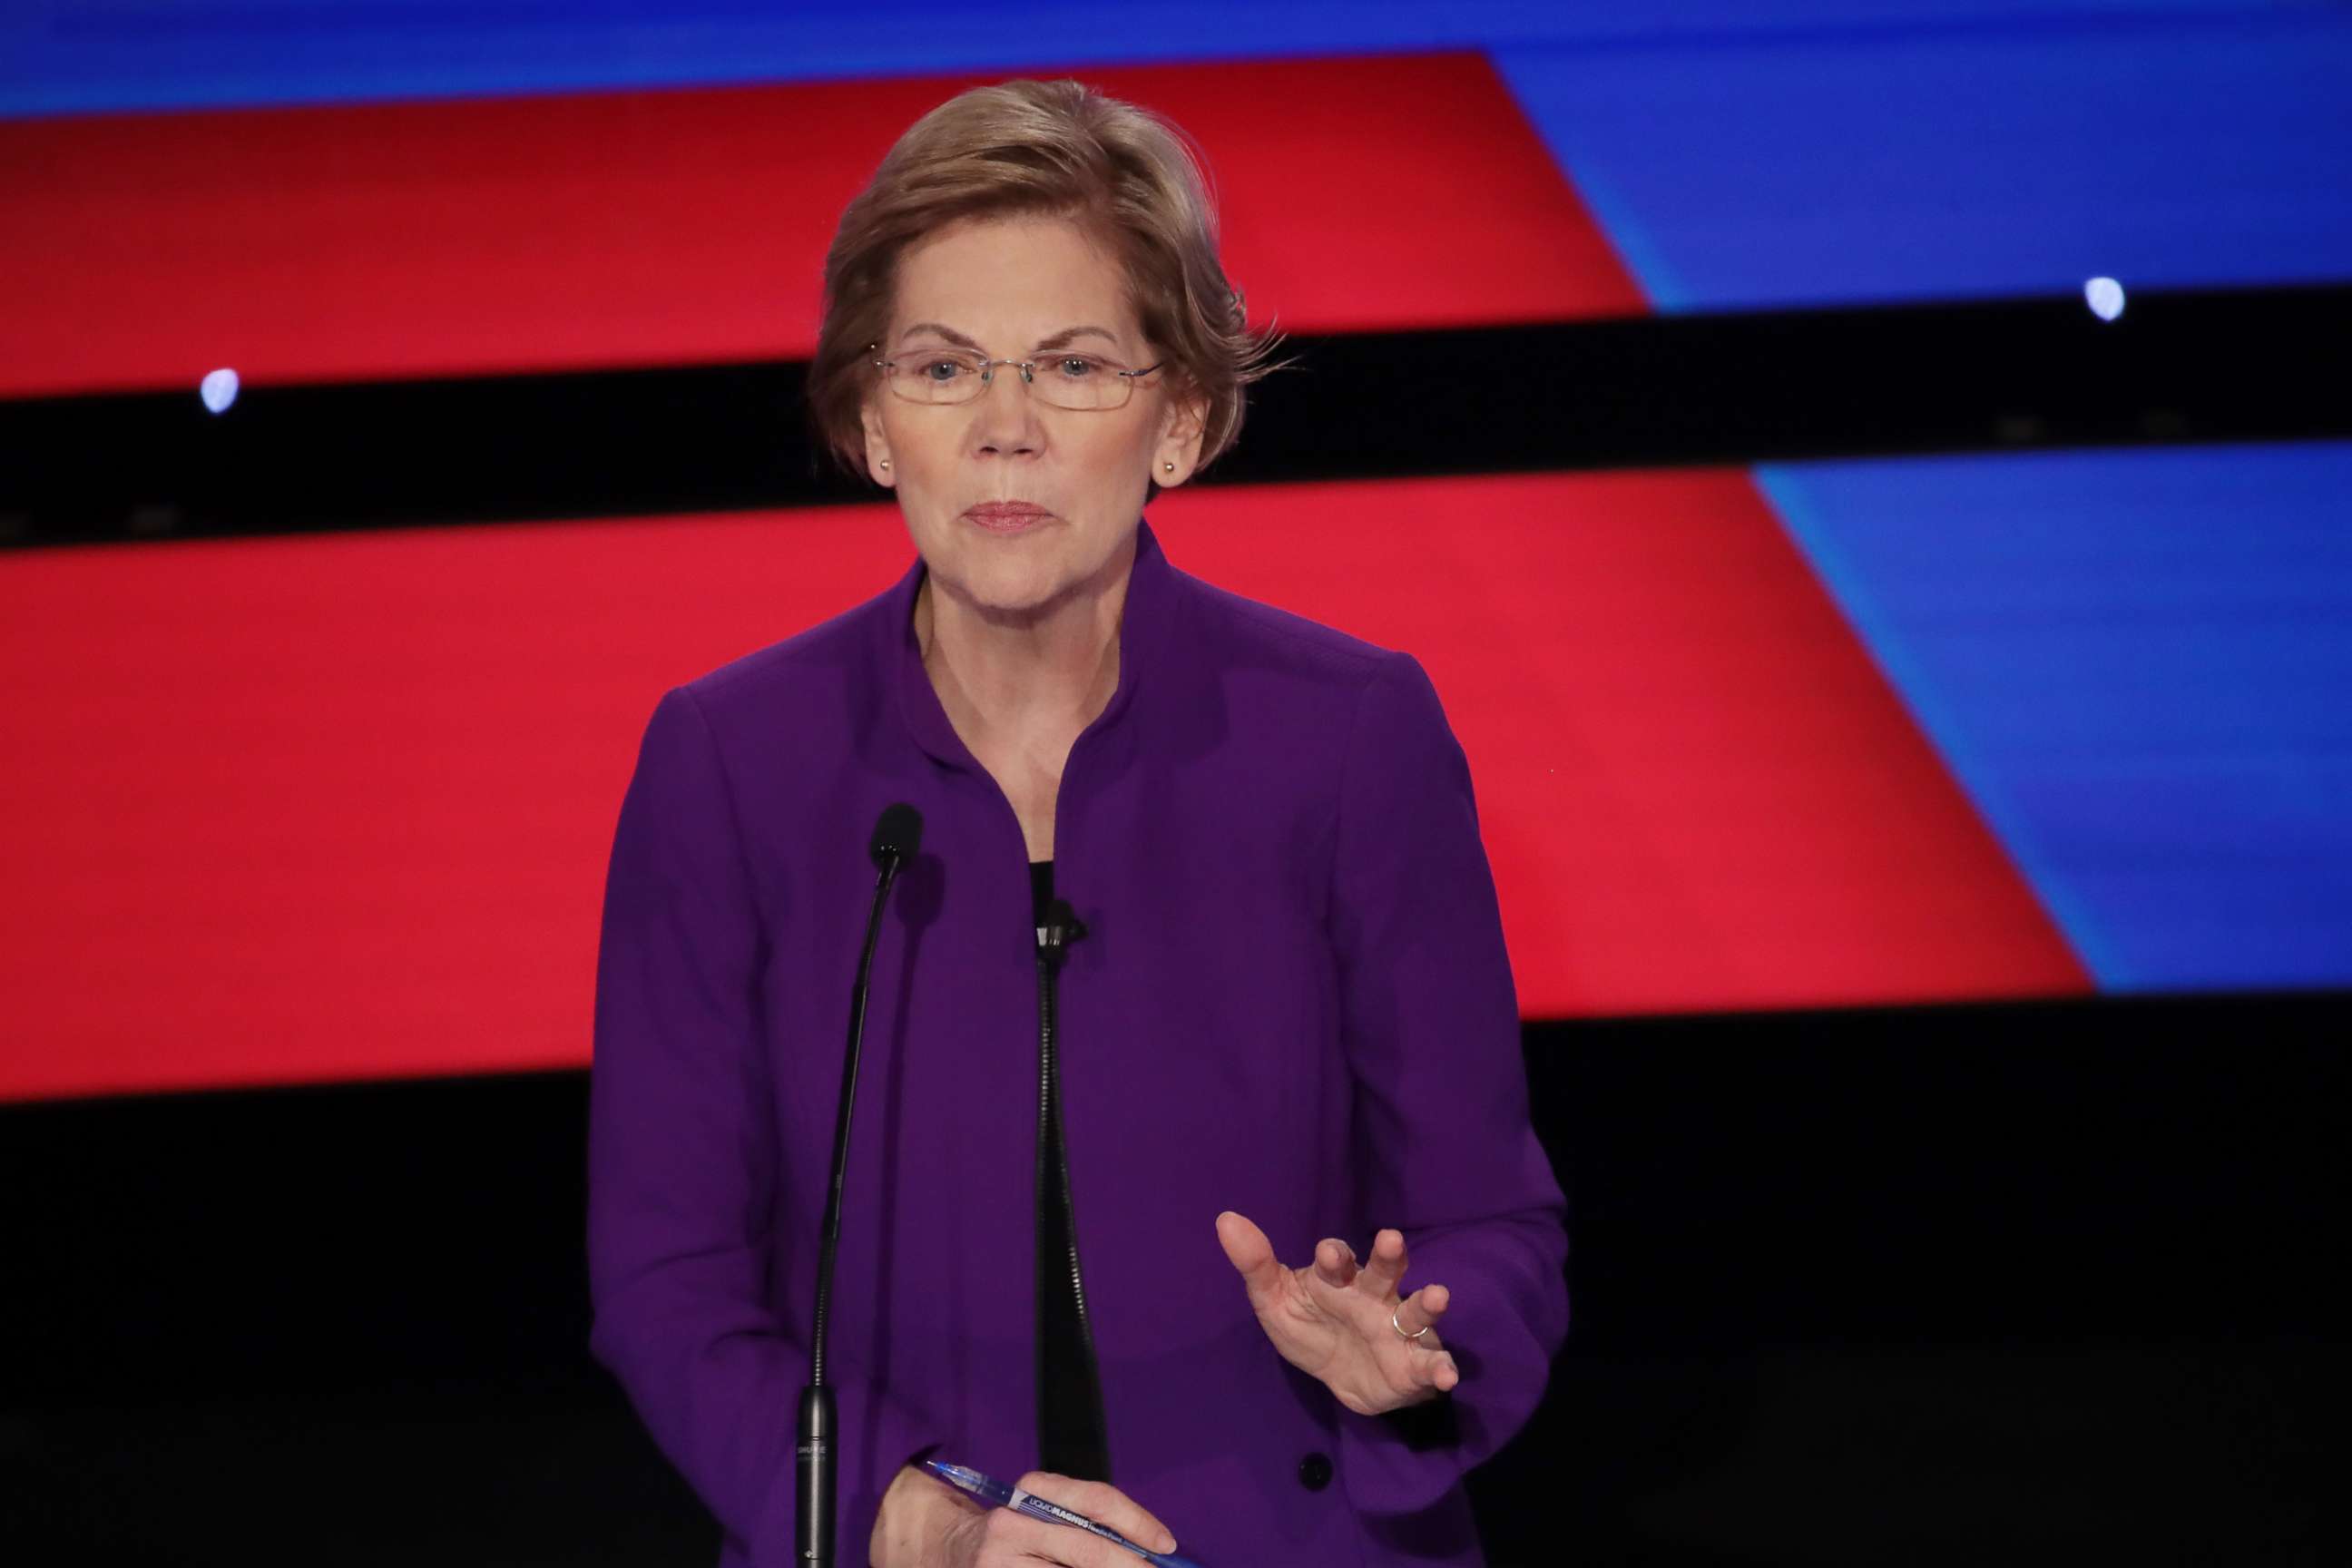 PHOTO: Sen. Elizabeth Warren speaks during the Democratic presidential primary debate at Drake University, Jan. 14, 2020, in Des Moines, Iowa.